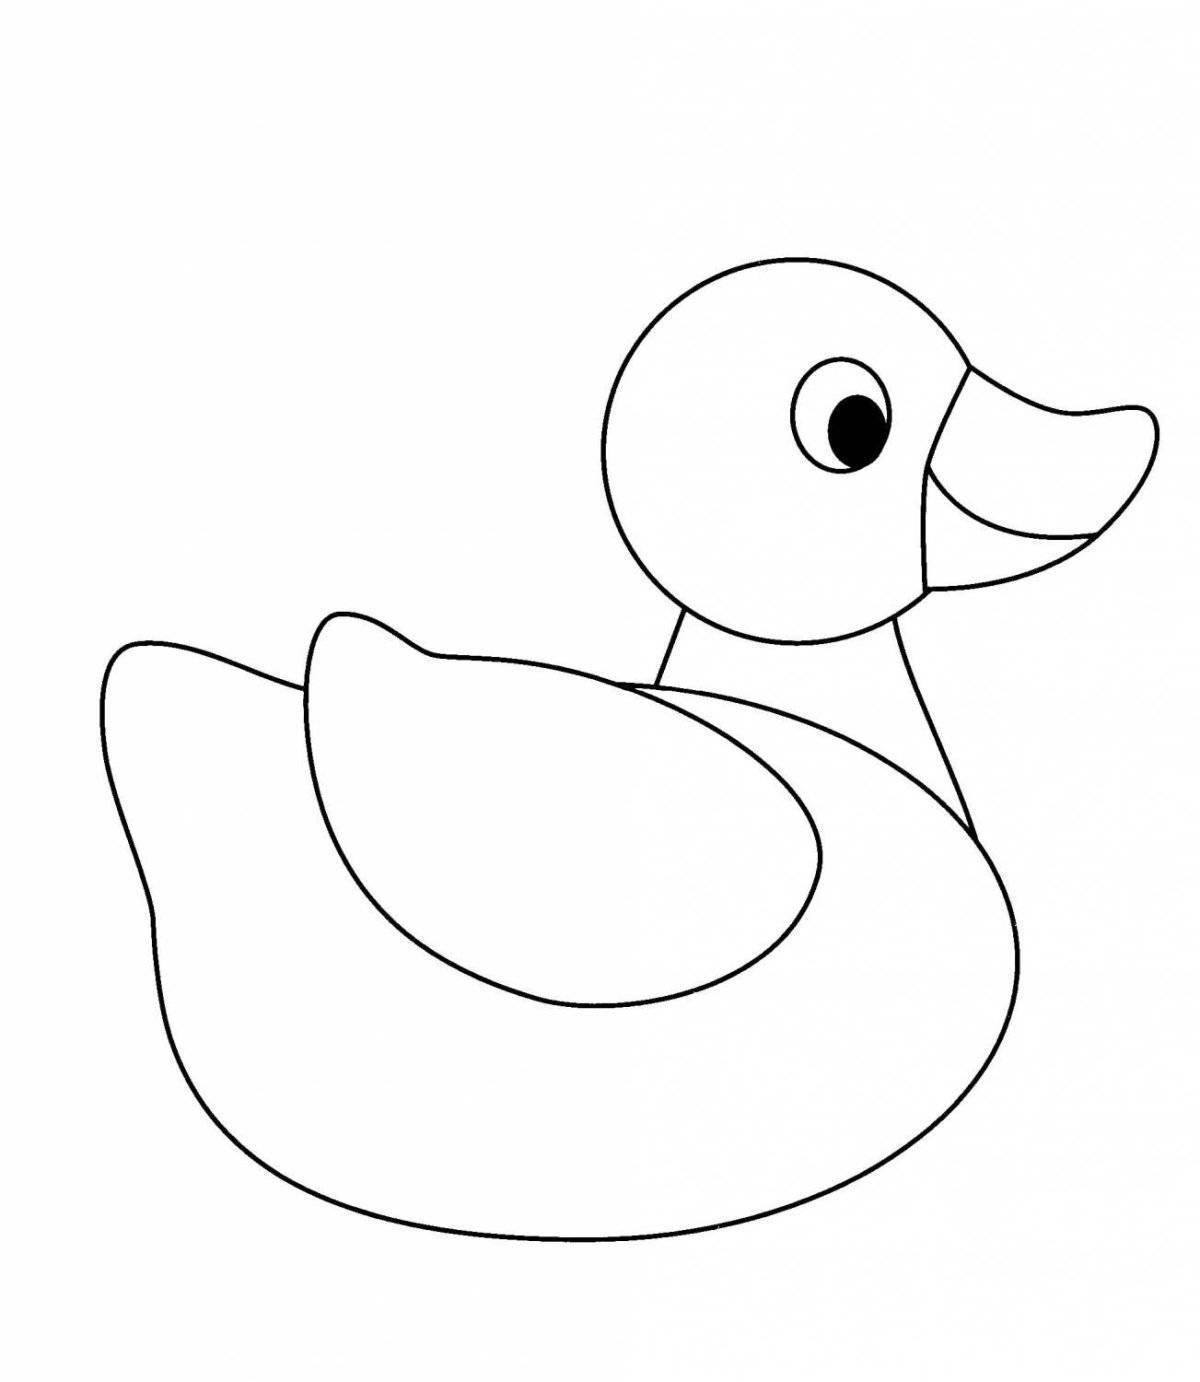 Cute lalanfant duck coloring book